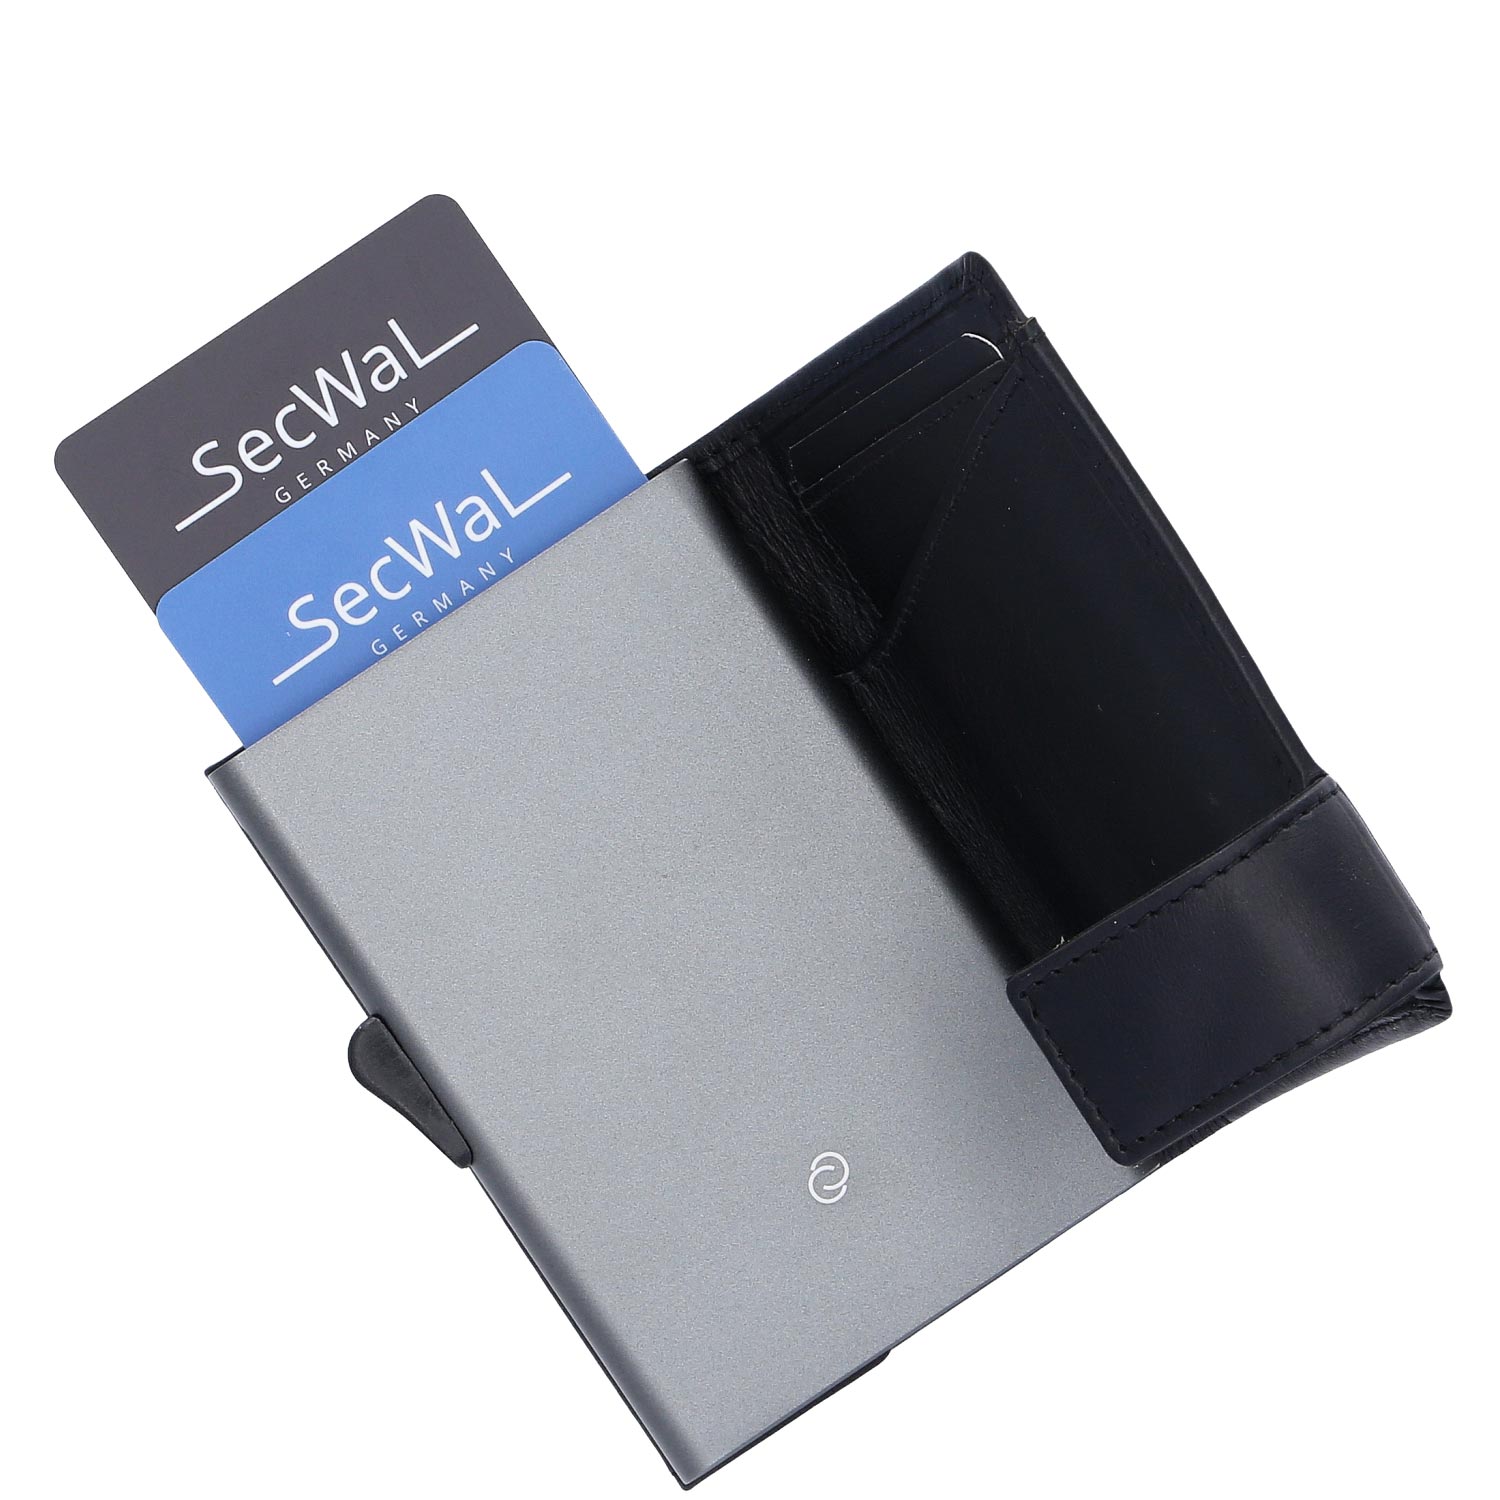 Secwal Mini Wallet Kreditkartenetui schwarz